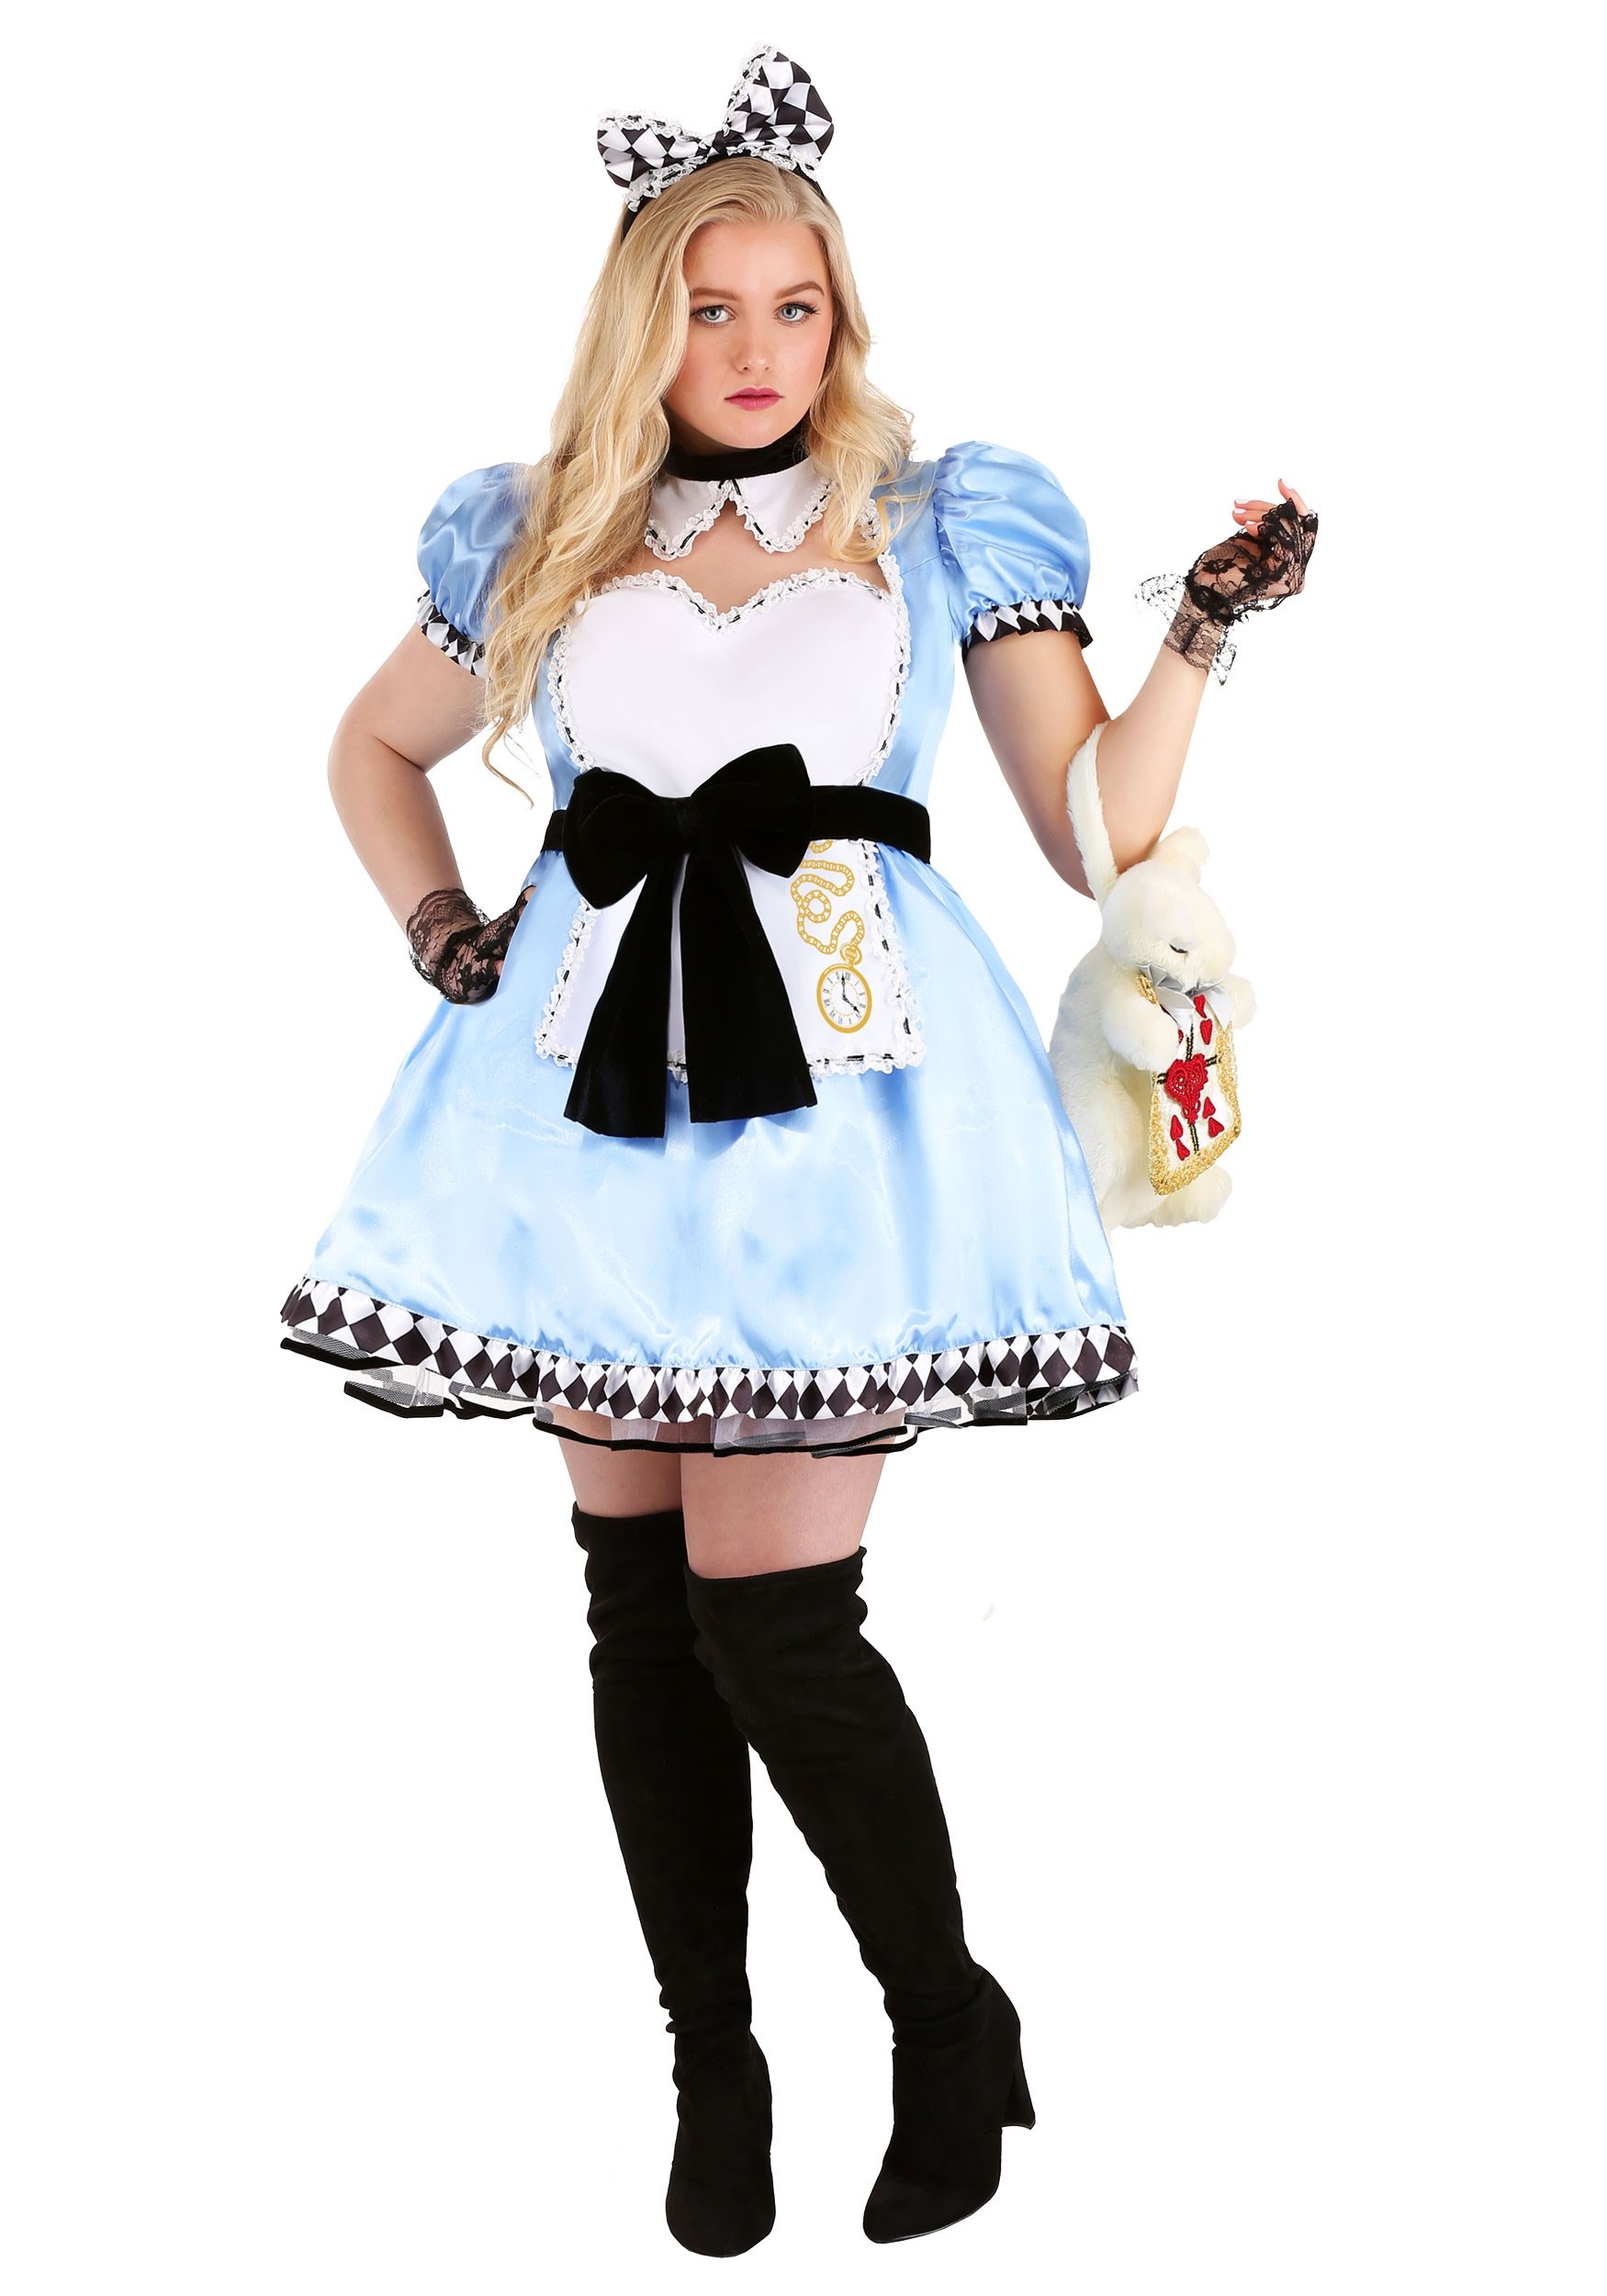 Plus Size Alluring Alice Costume for Women